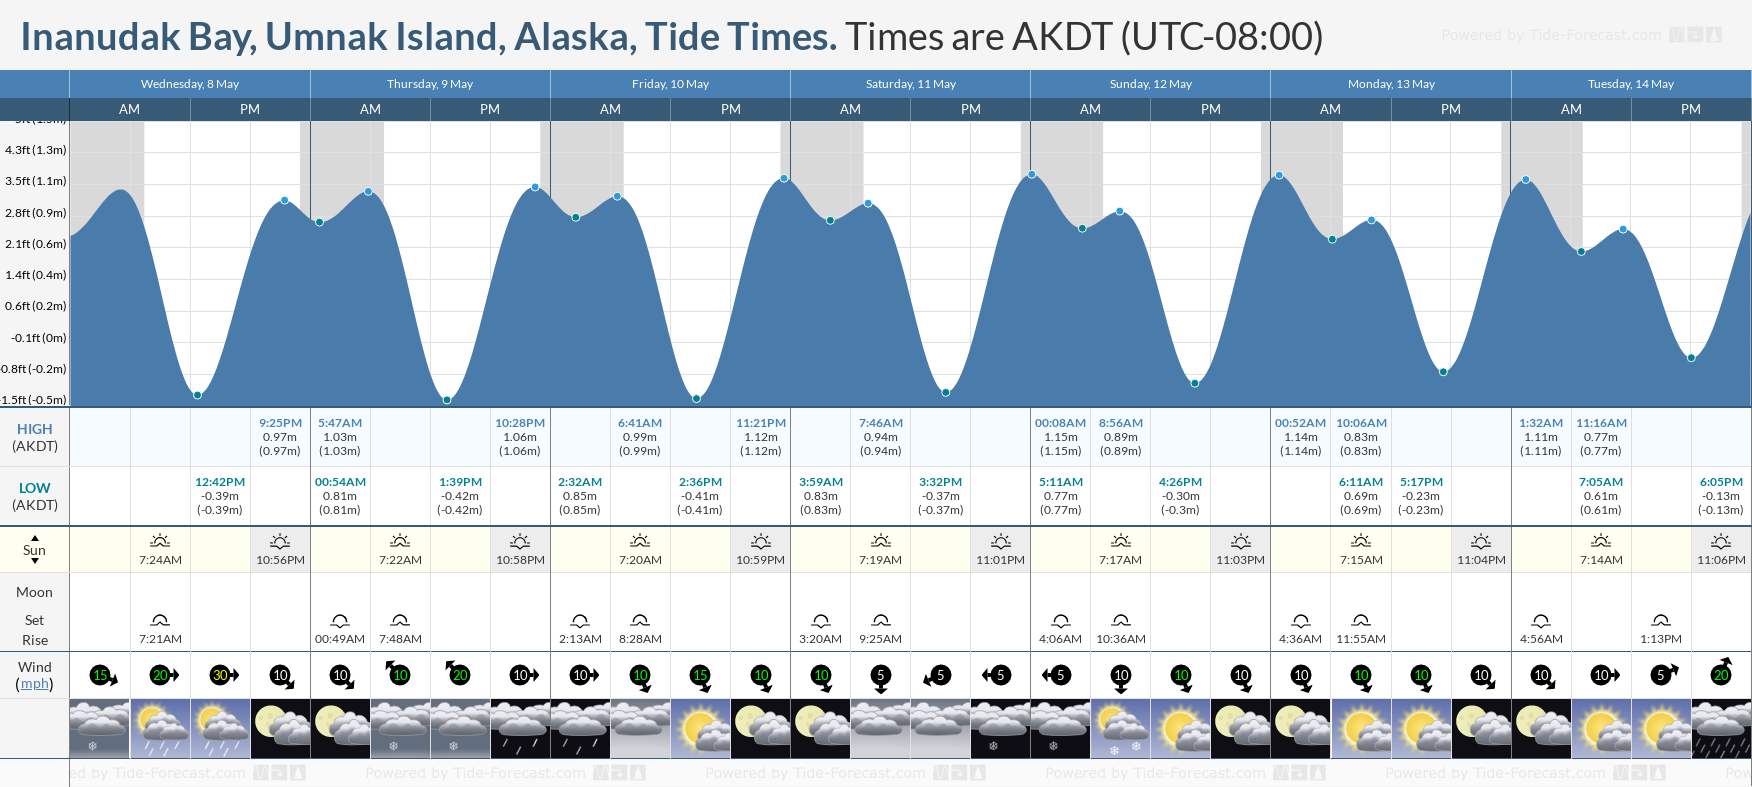 Inanudak Bay, Umnak Island, Alaska Tide Chart including high and low tide tide times for the next 7 days